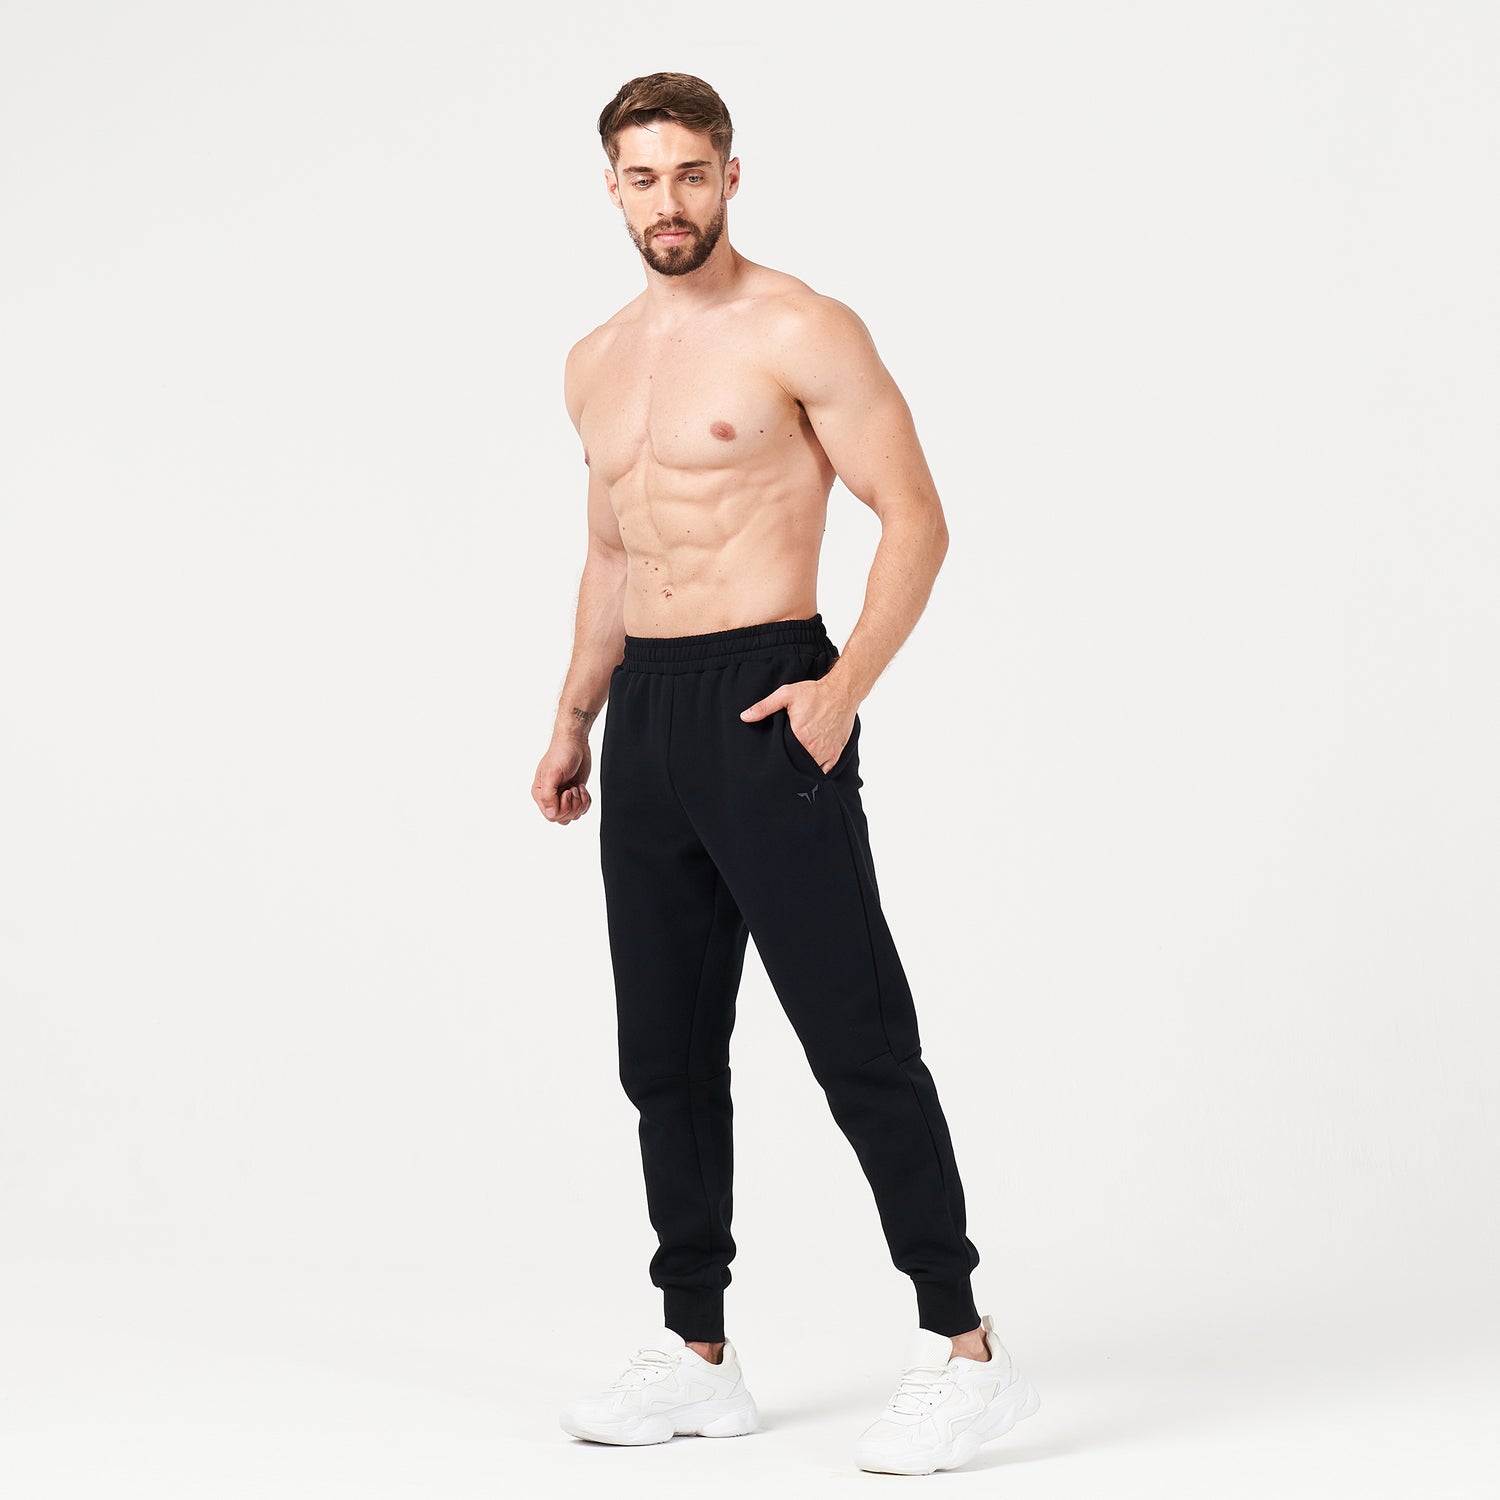 squatwolf-gym-wear-lab360-drylite-joggers-black-workout-pants-for-men